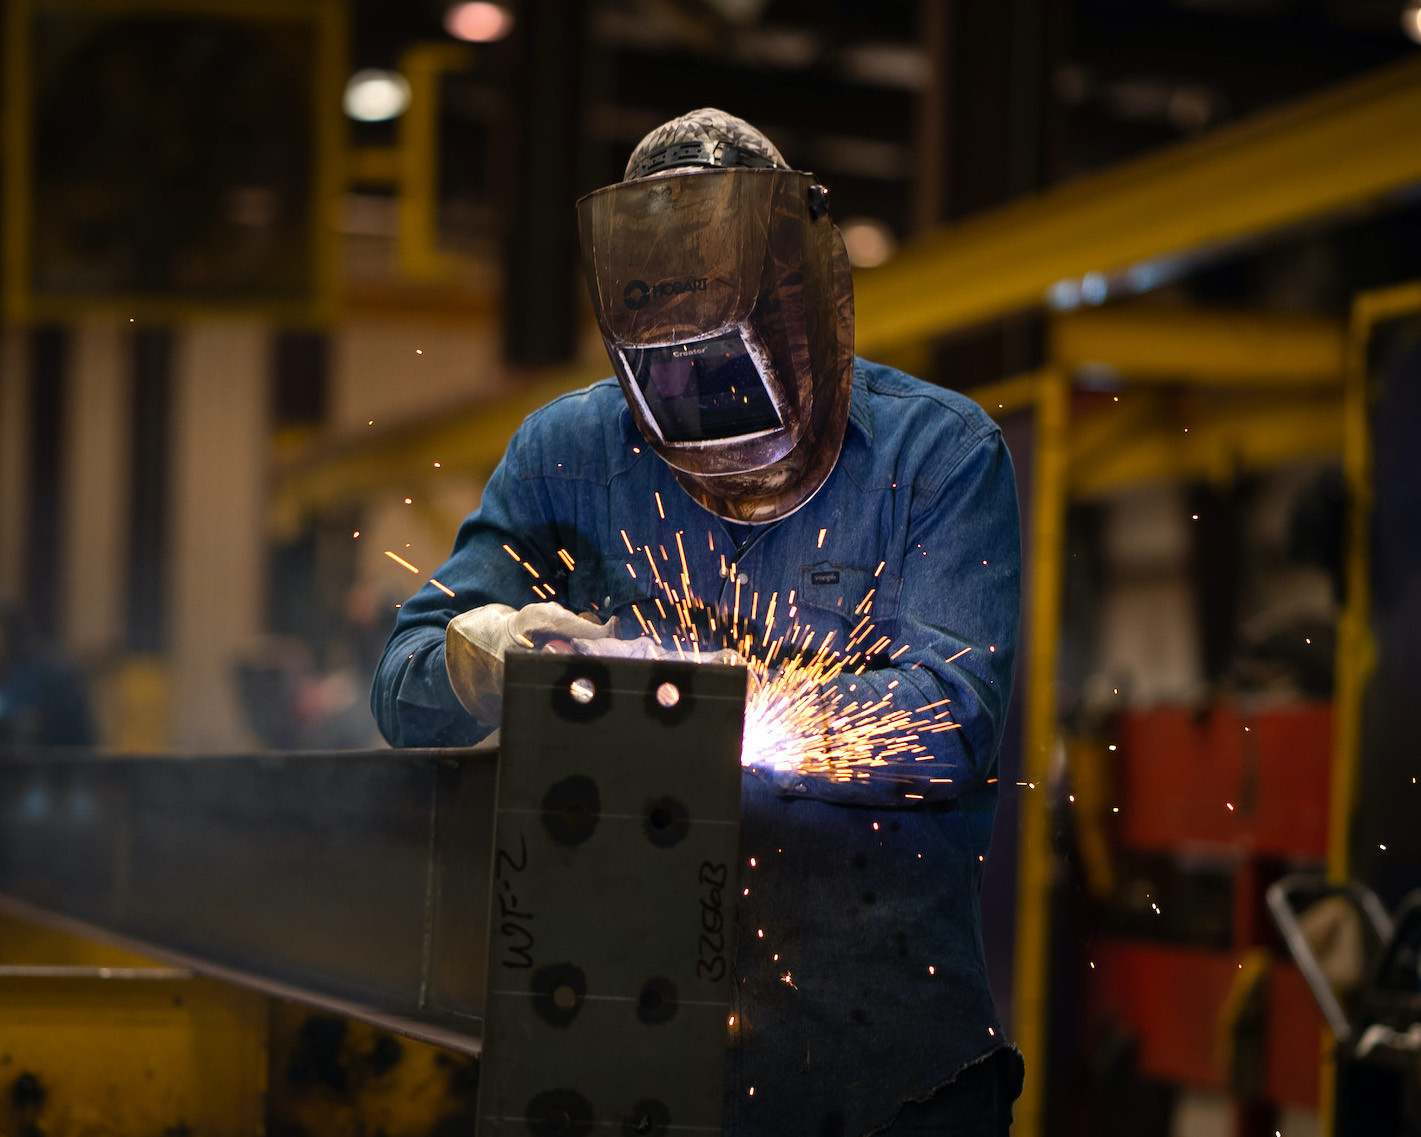 Employee welding a piece of metal